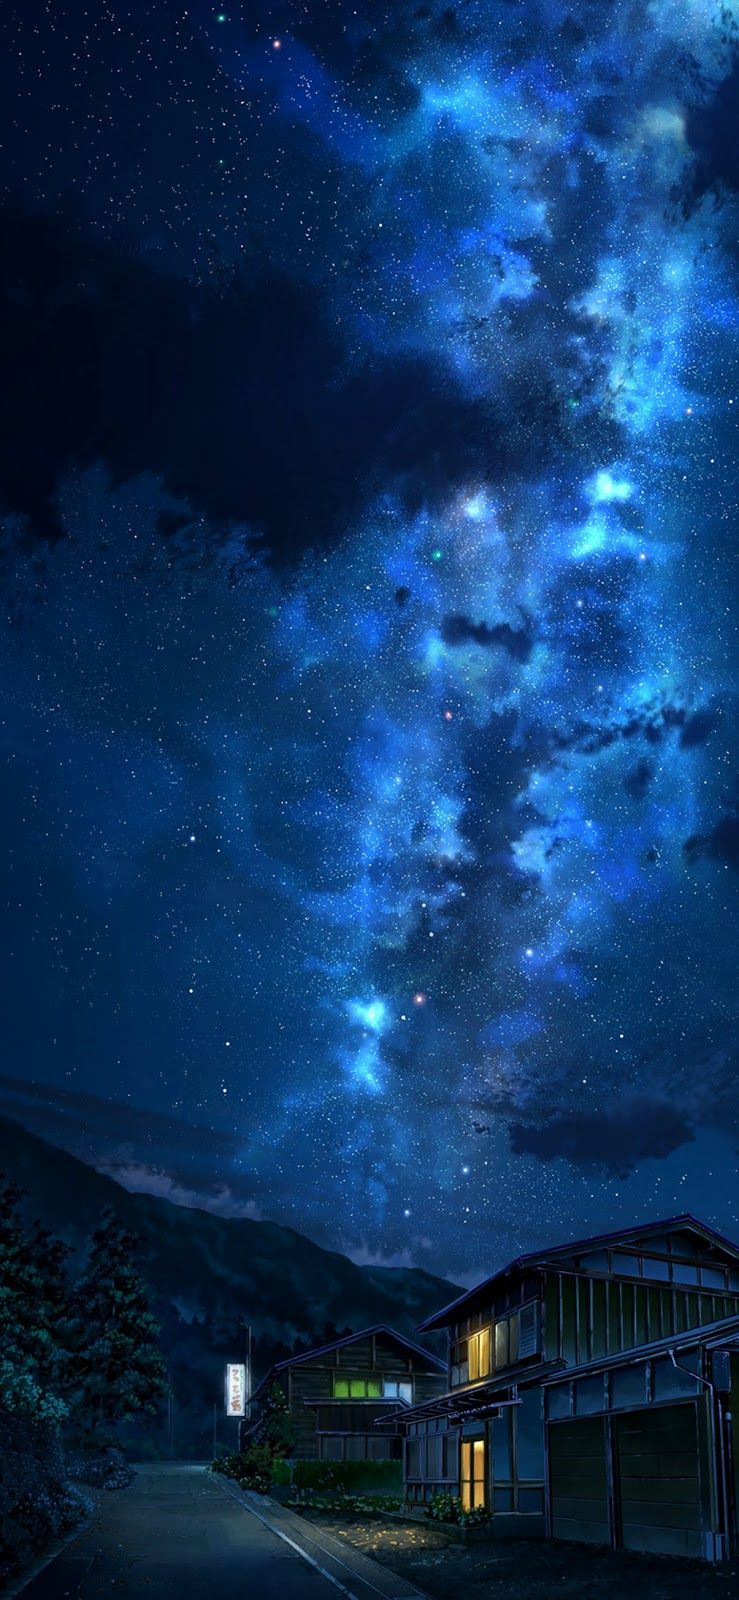 Beautiful night sky wallpaper for iPhone XSMAX / iPhone 11 Pro Max